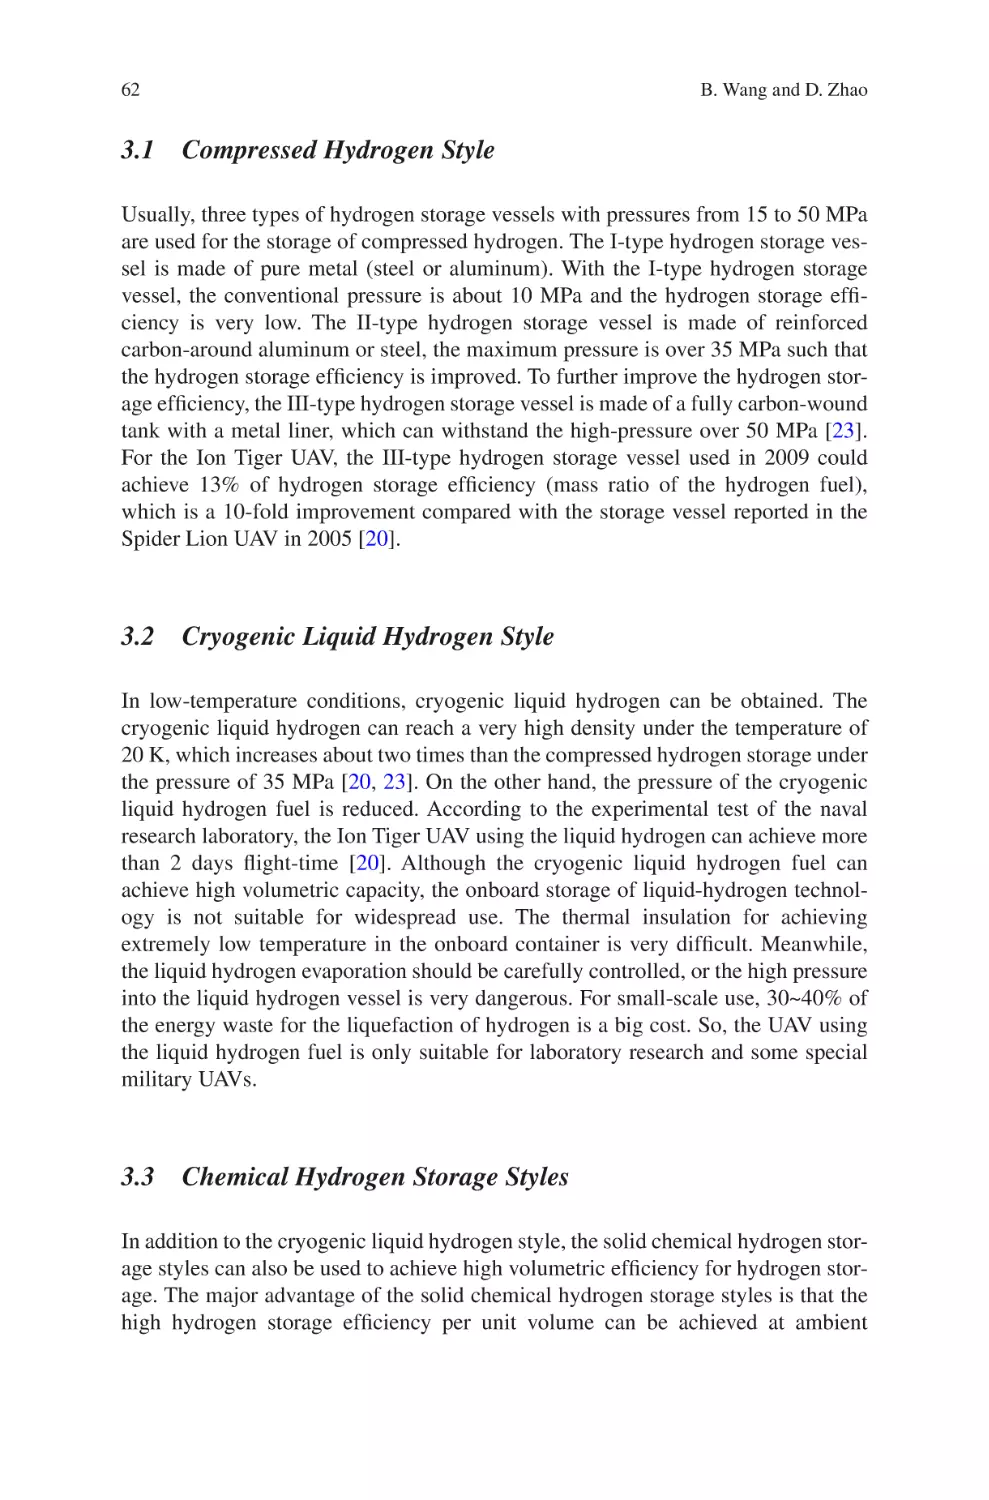 3.1 Compressed Hydrogen Style
3.2 Cryogenic Liquid Hydrogen Style
3.3 Chemical Hydrogen Storage Styles